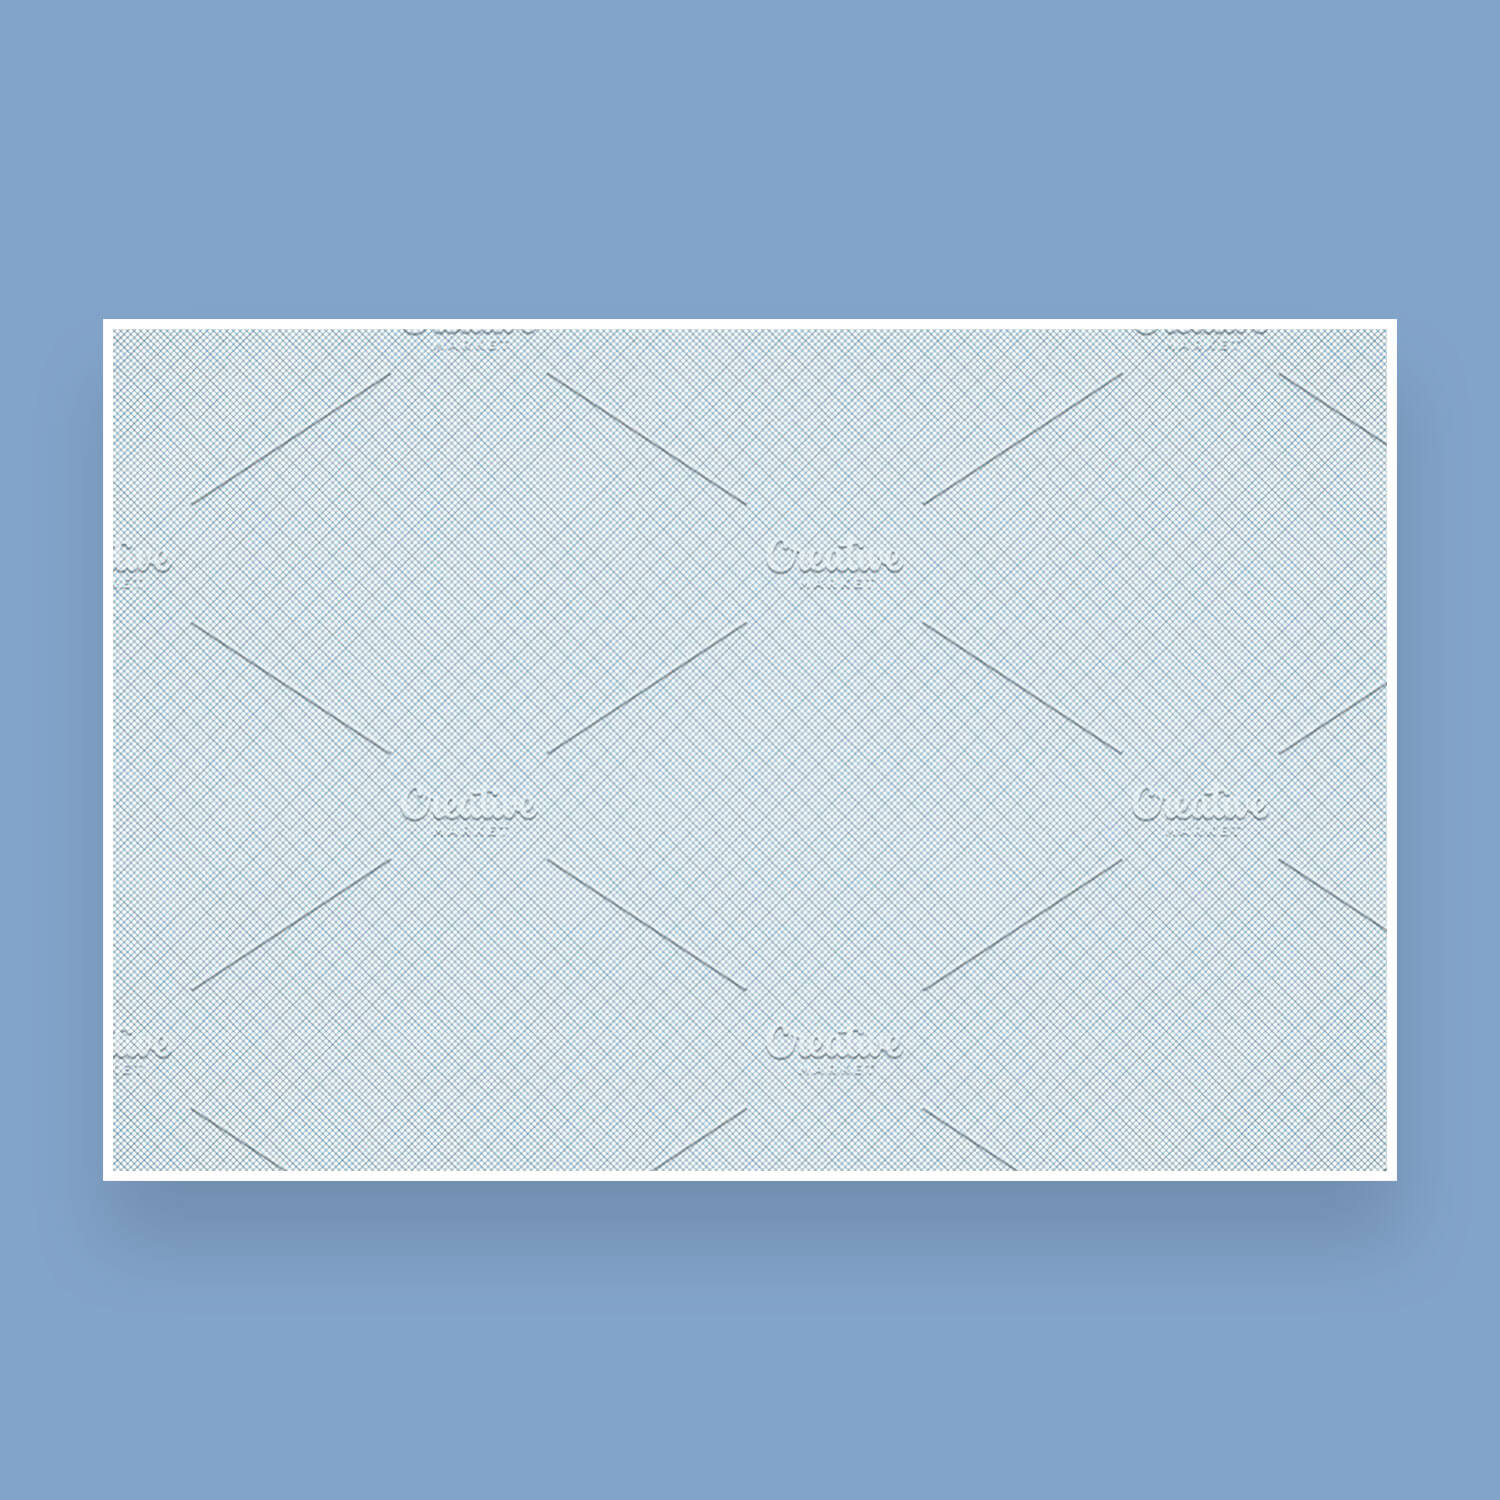 Seamless mesh pattern - small dense rhombuses.